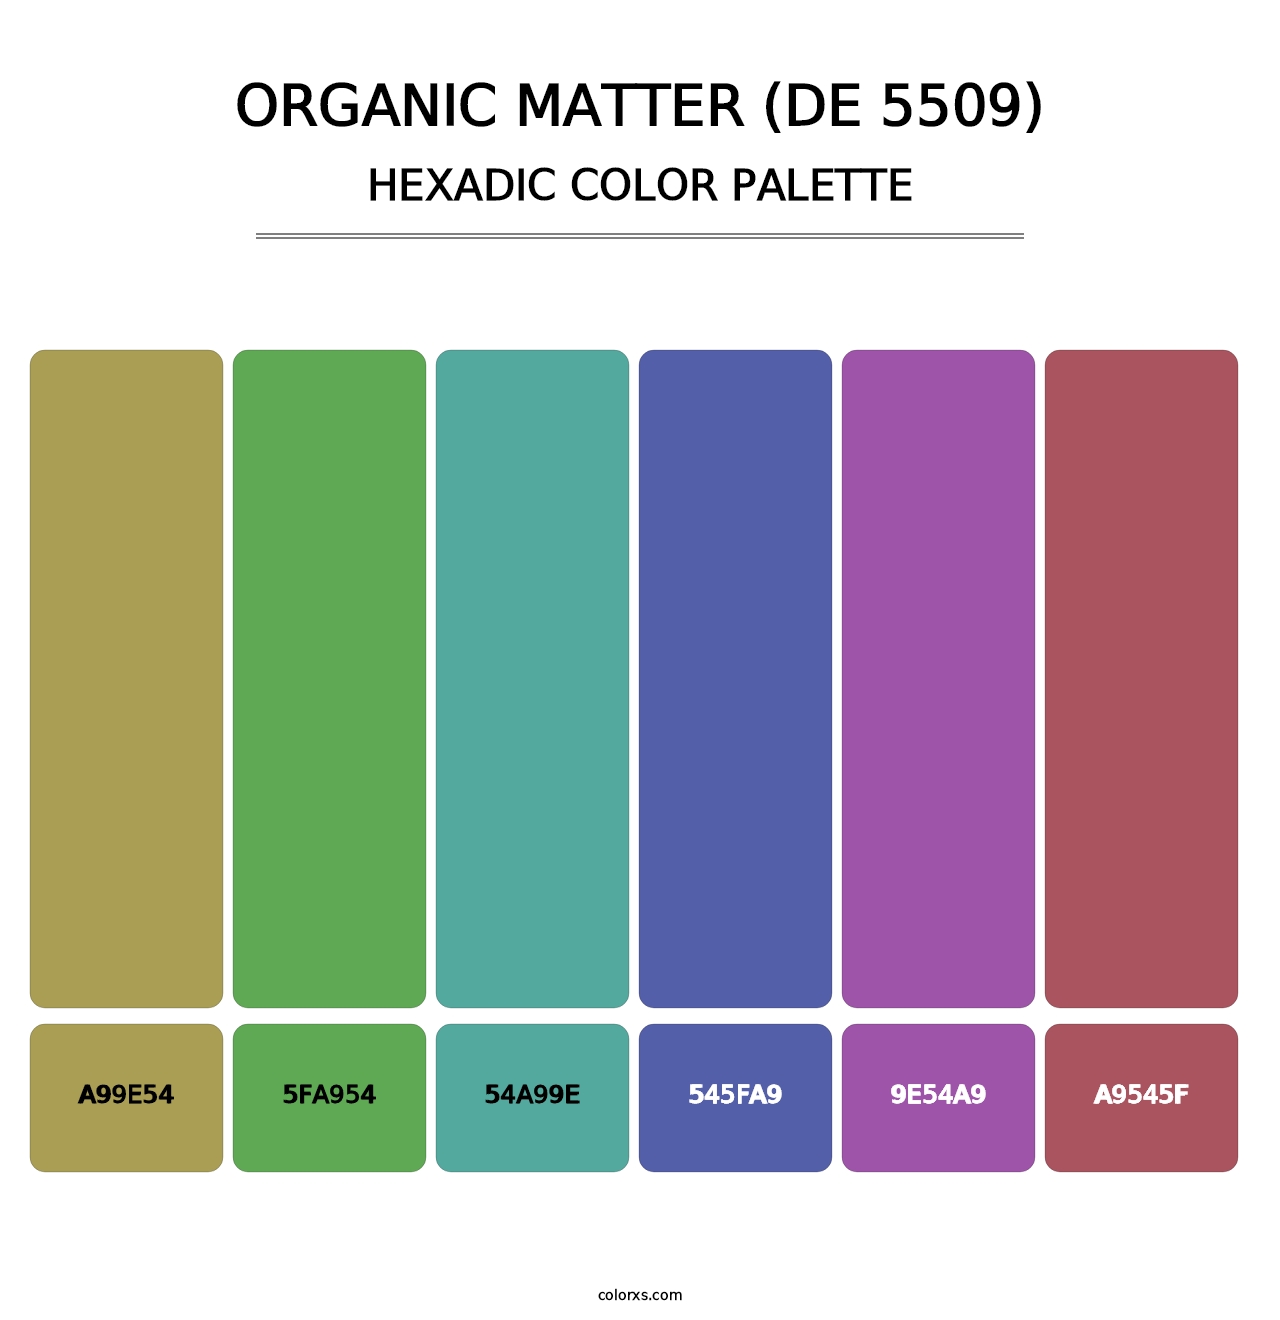 Organic Matter (DE 5509) - Hexadic Color Palette